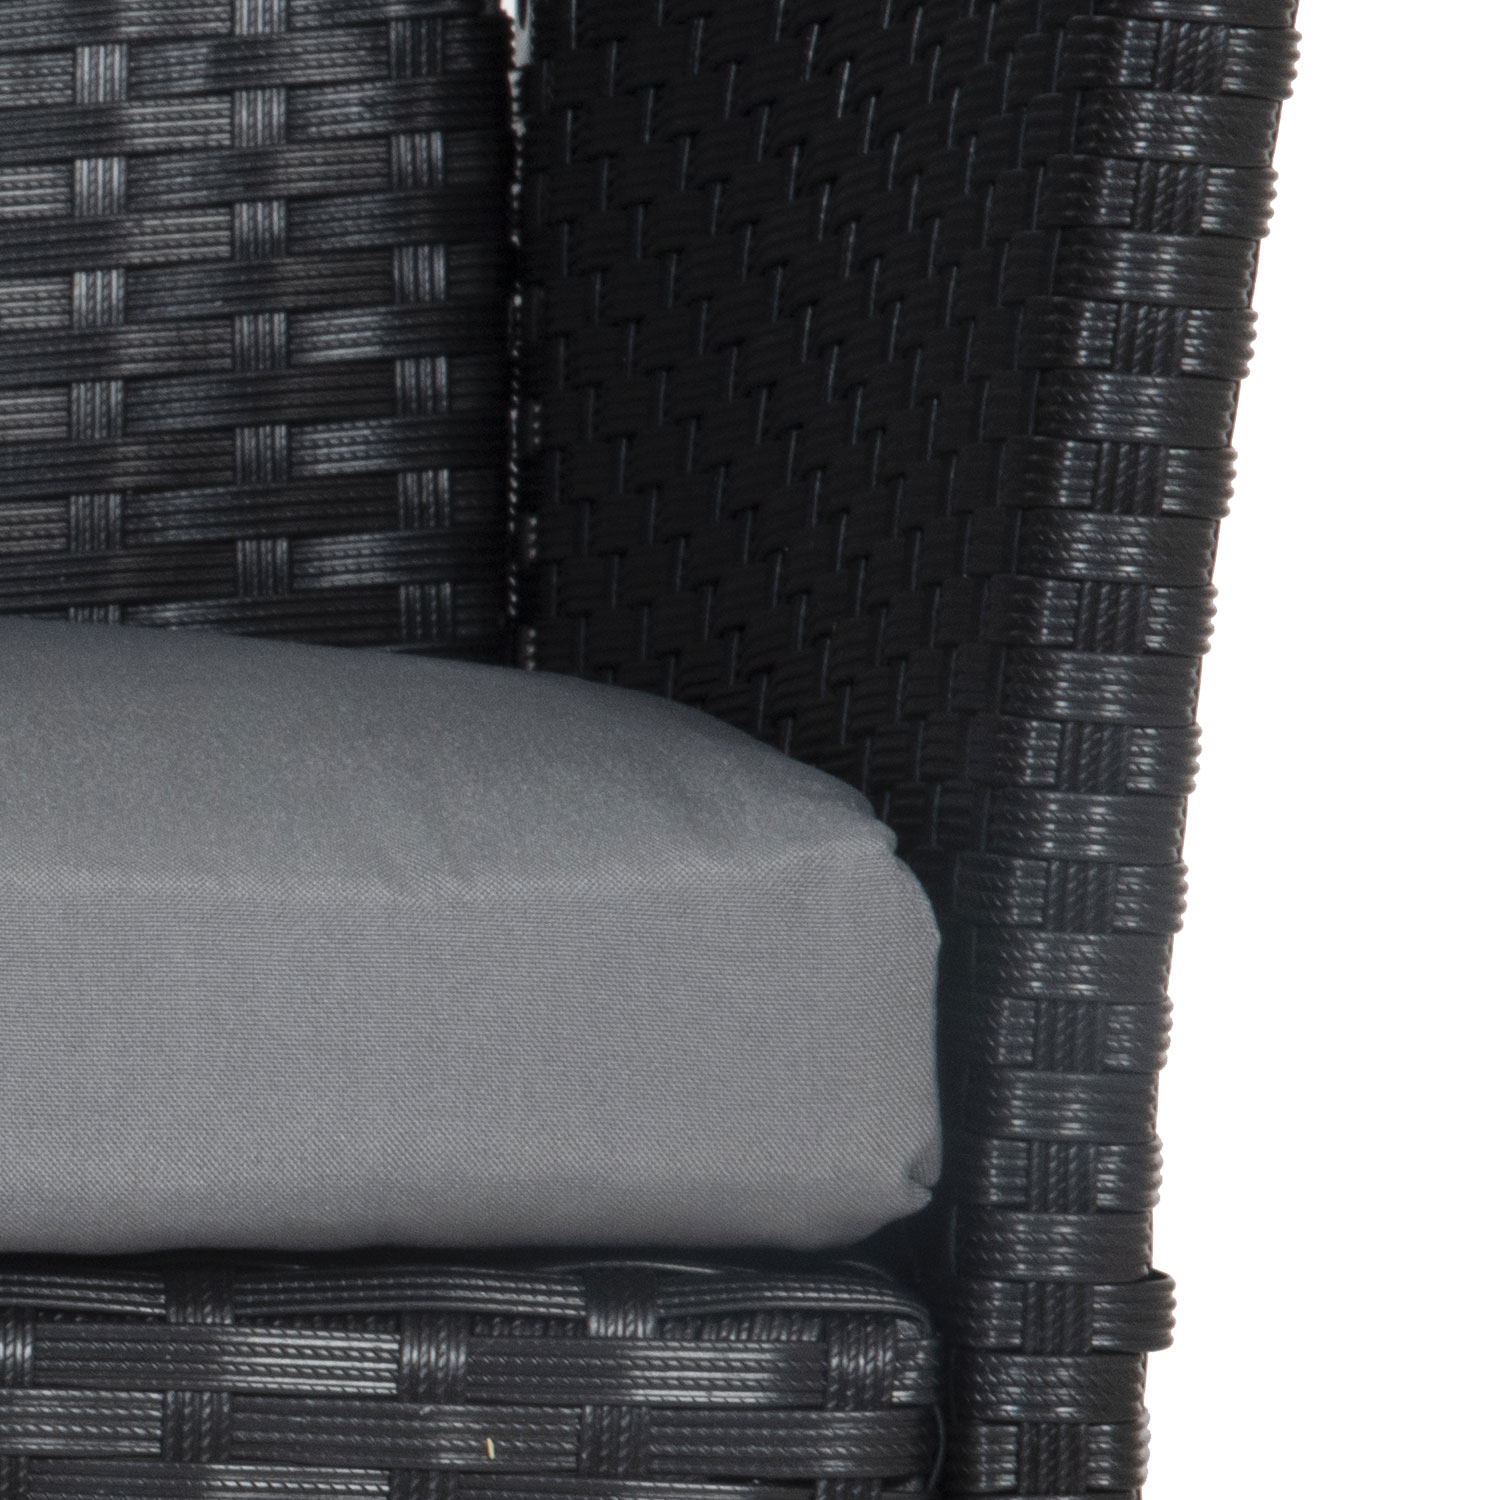 Gartenmöbel CORDOUE aus schwarzem Harzgeflecht, 4 Sitzplätze - graue Kissen